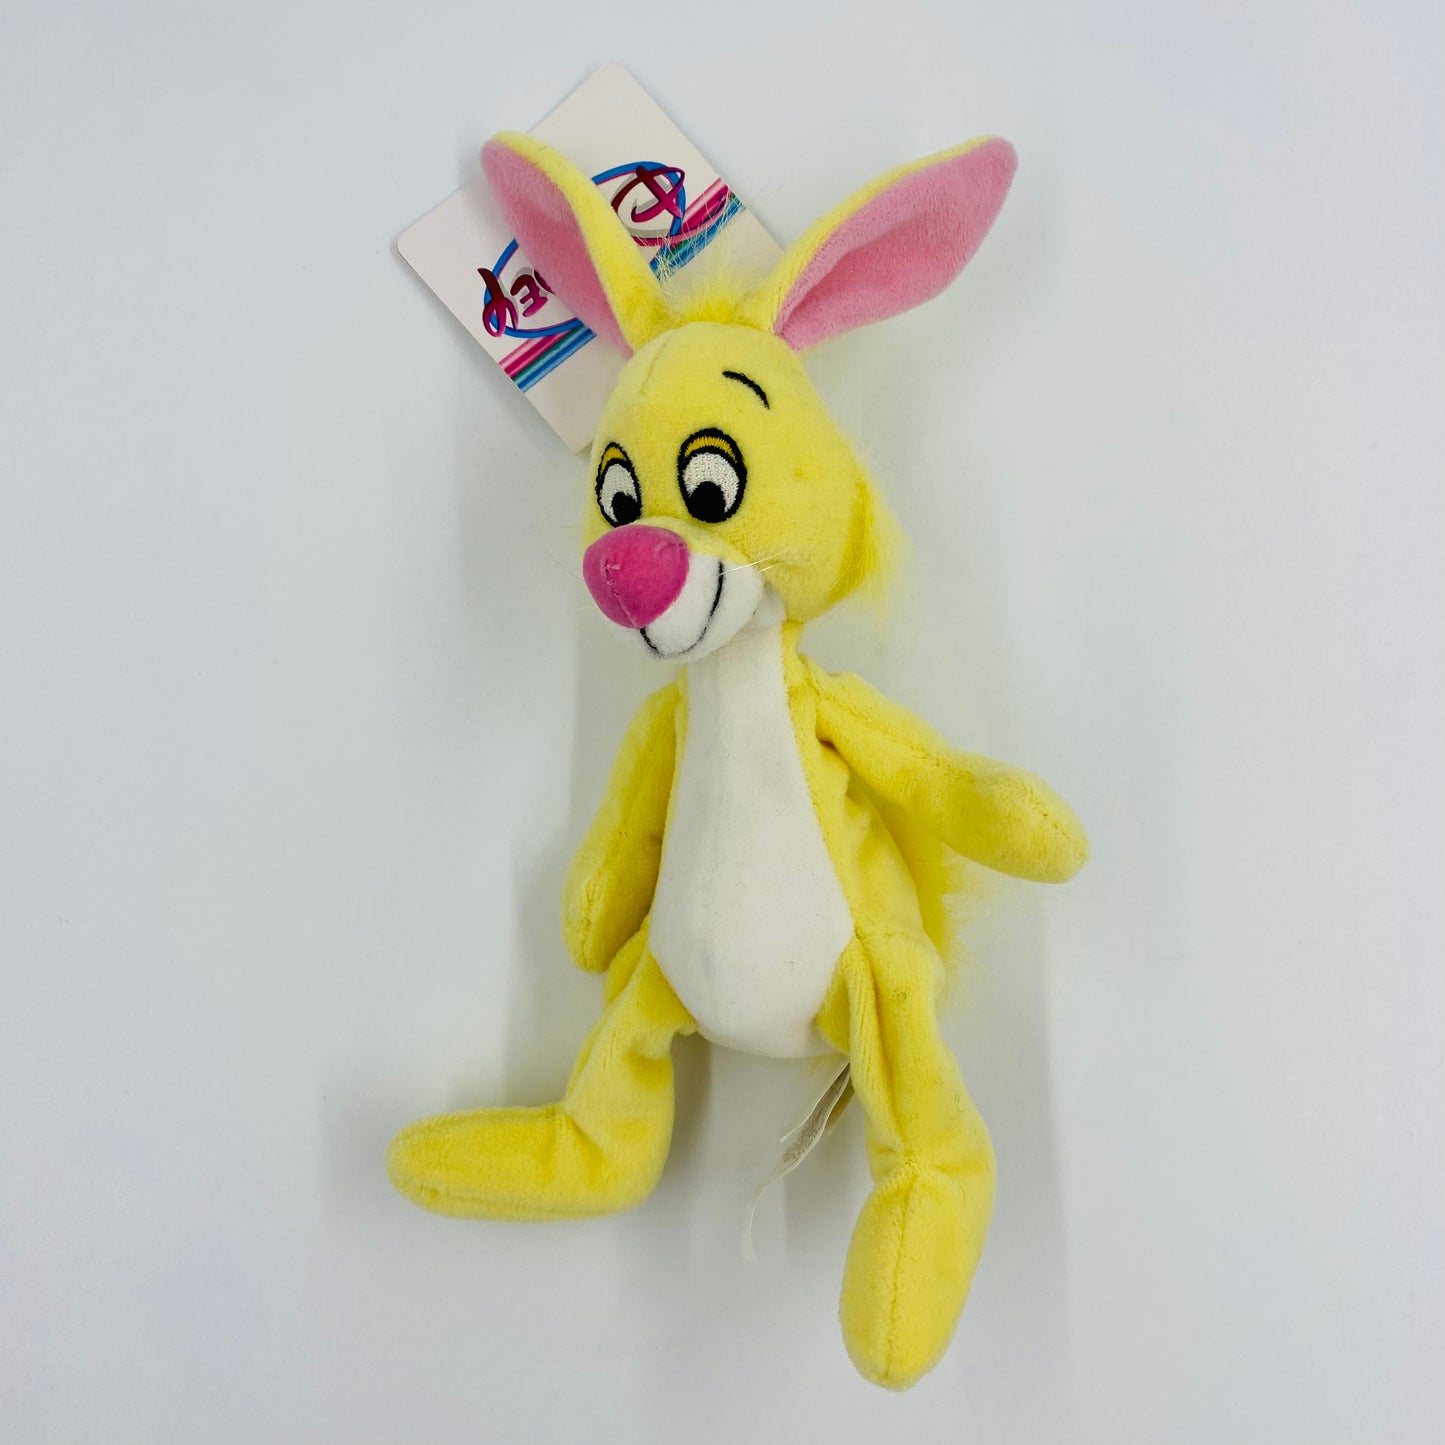 The Disney Store Winnie the Pooh Rabbit mini bean bag plush